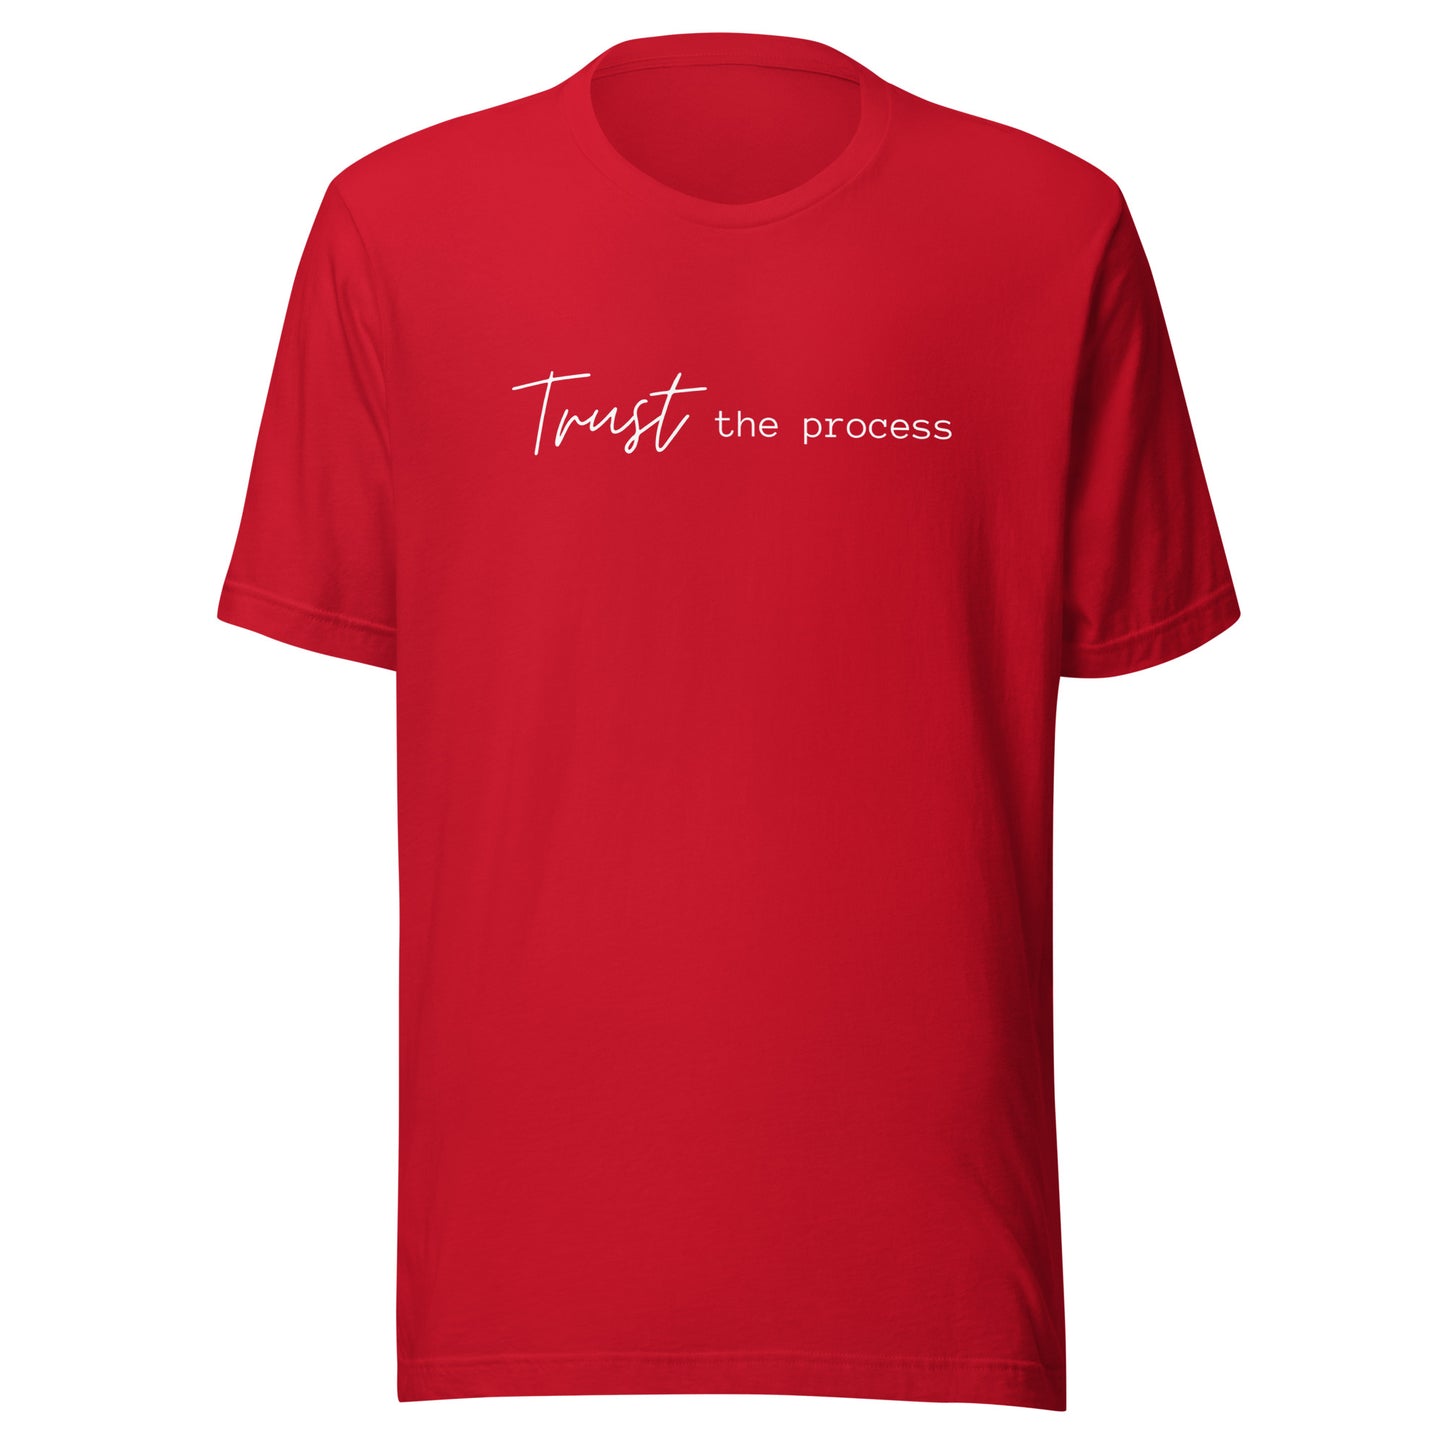 Trust the process - Unisex t-shirt